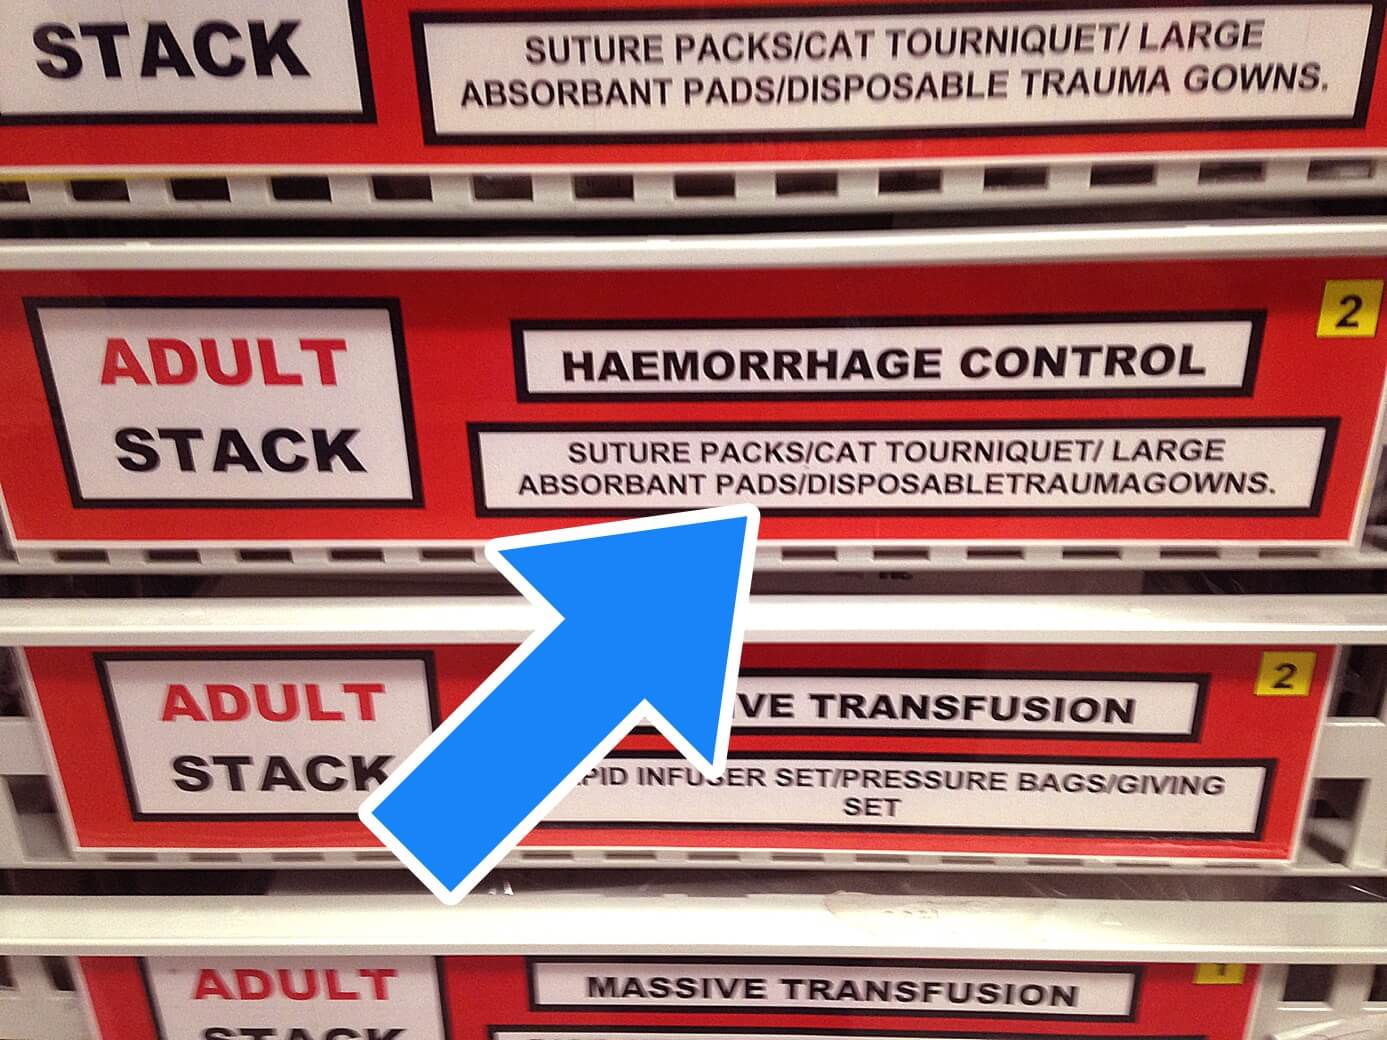 Haemorrhage Control - Resus stack.jpg